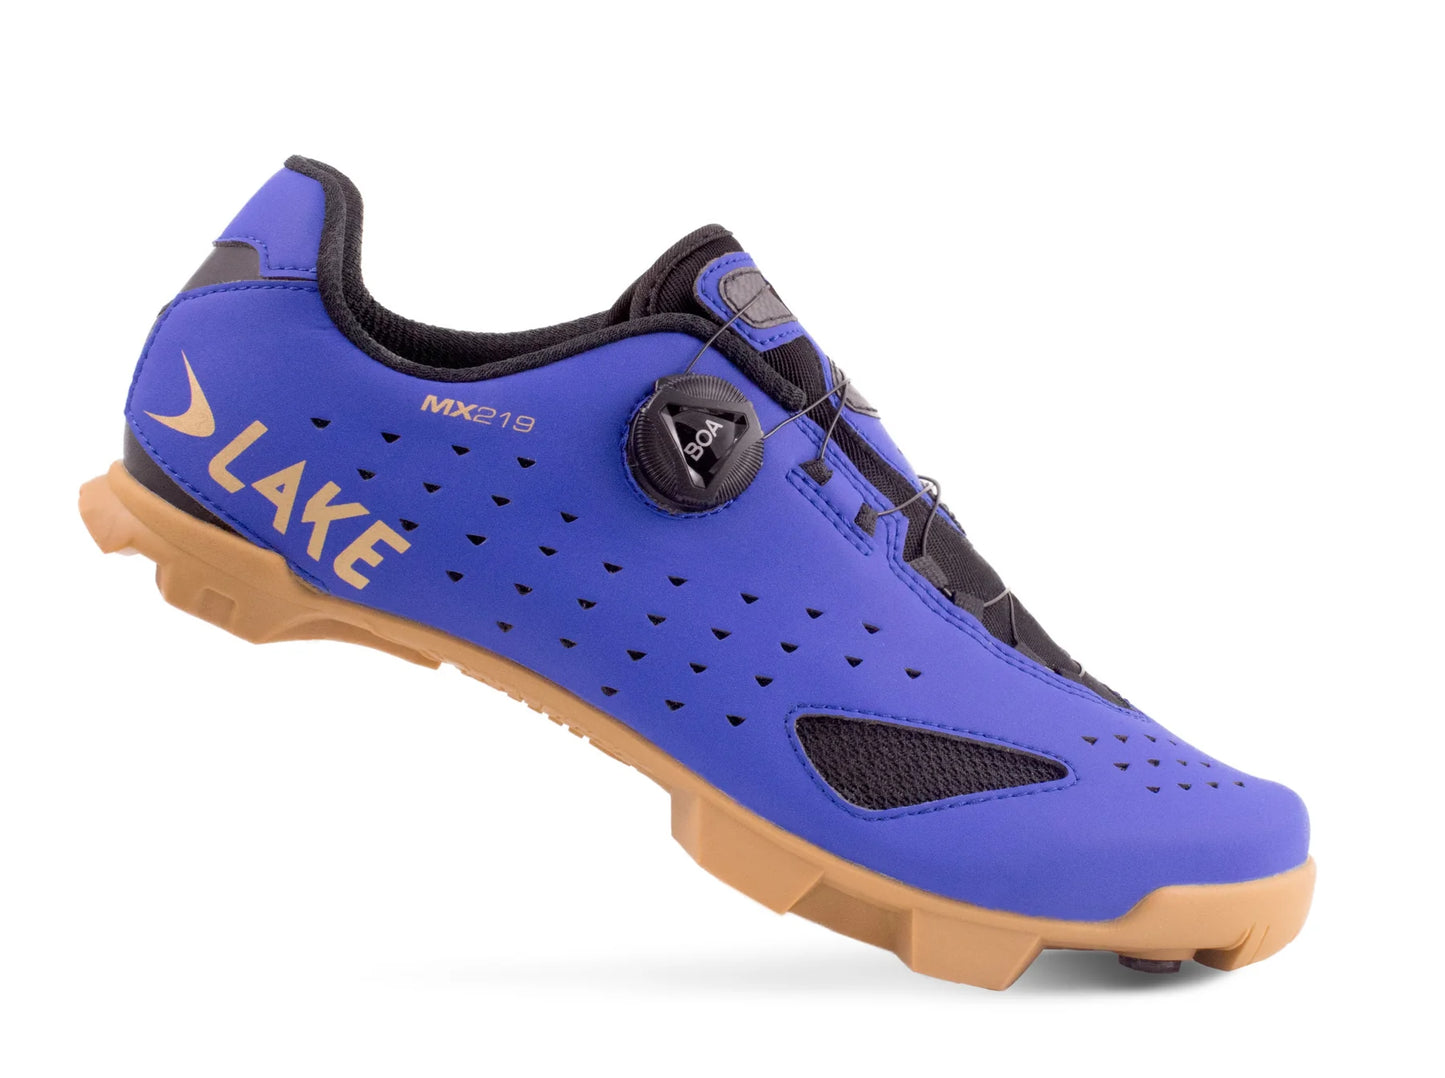 Lake MX219 MTB Cycling Shoes